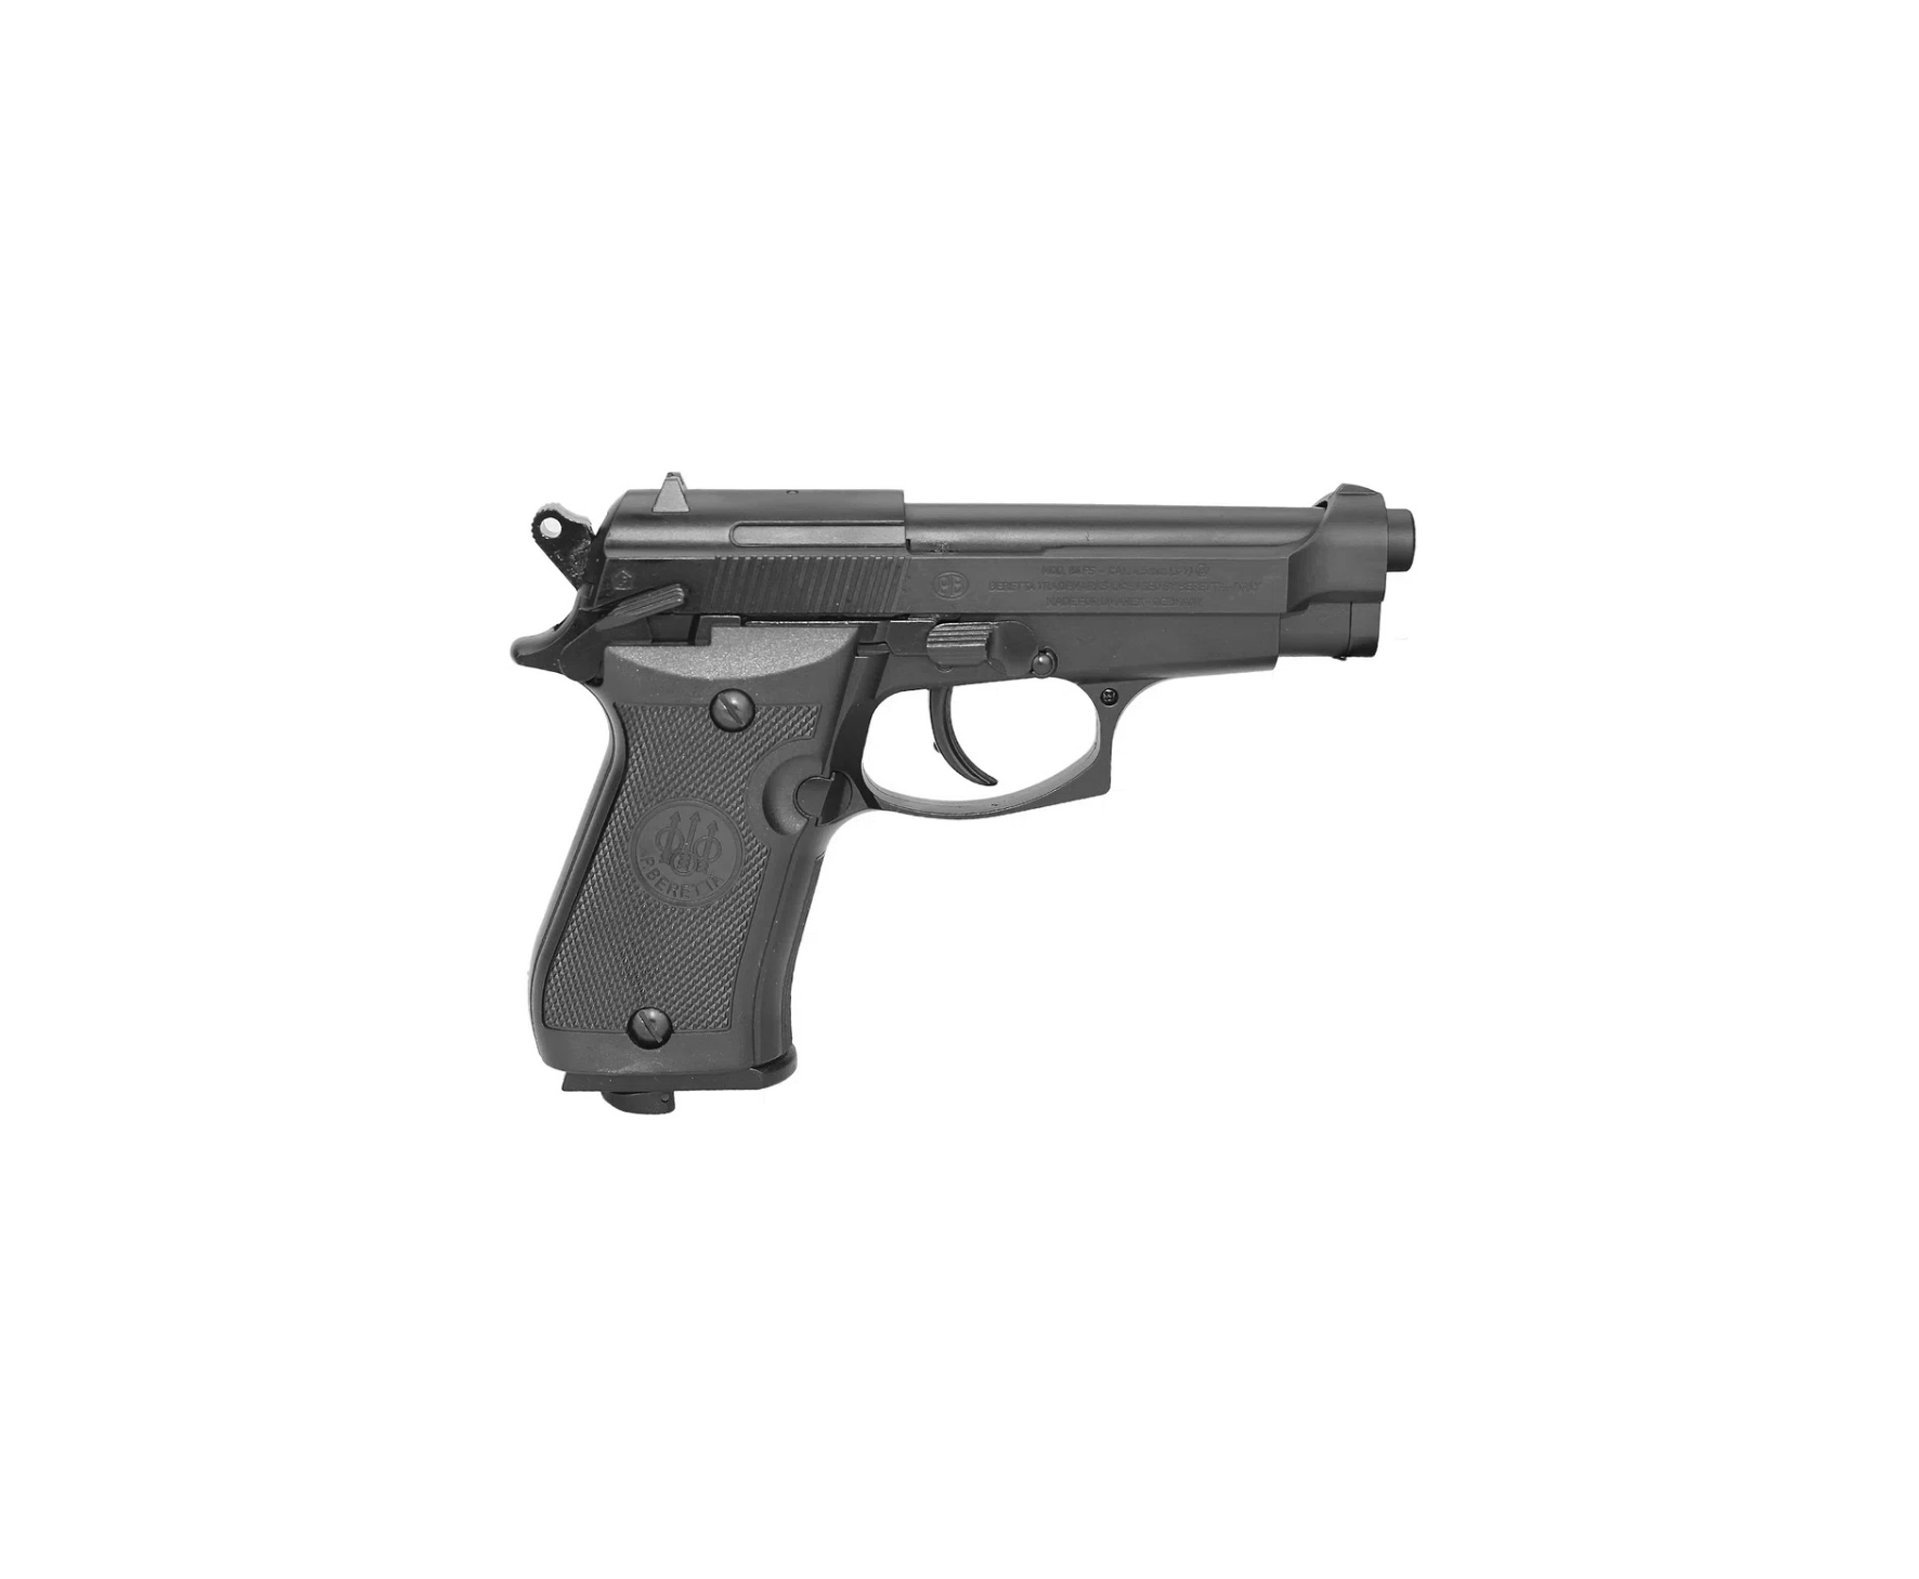 Pistola De Pressão Co2 Beretta 84 Fs Blowback Full Metal 4,5mm + Co2 + BBs + Oleo de silicone + Case + Speed Loader